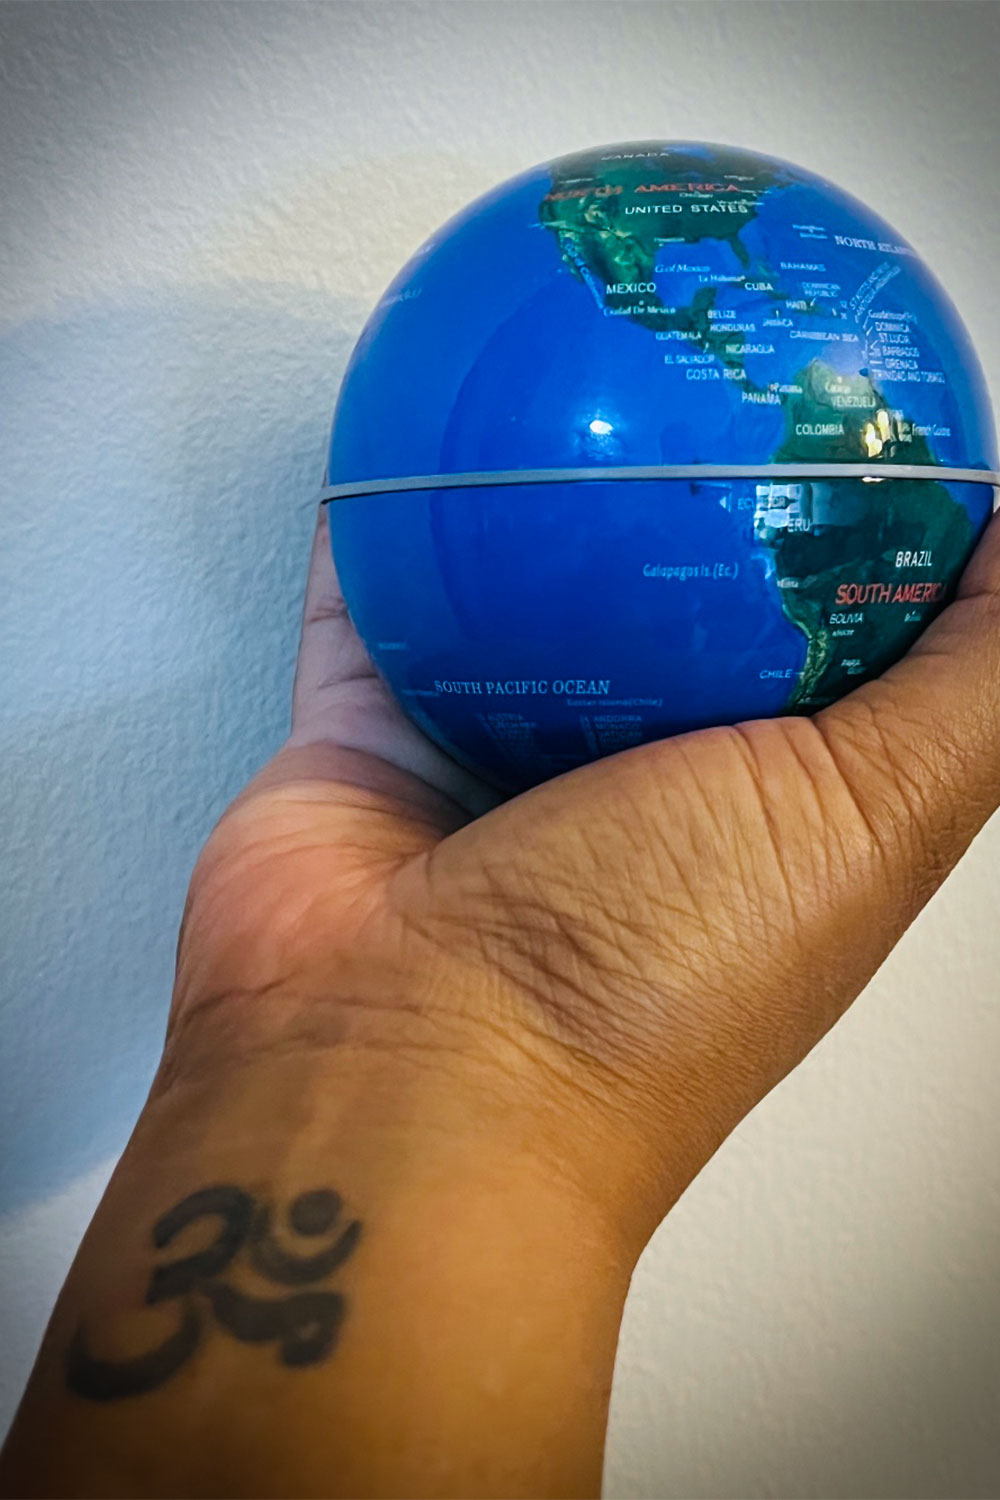 Lita hand holding globe